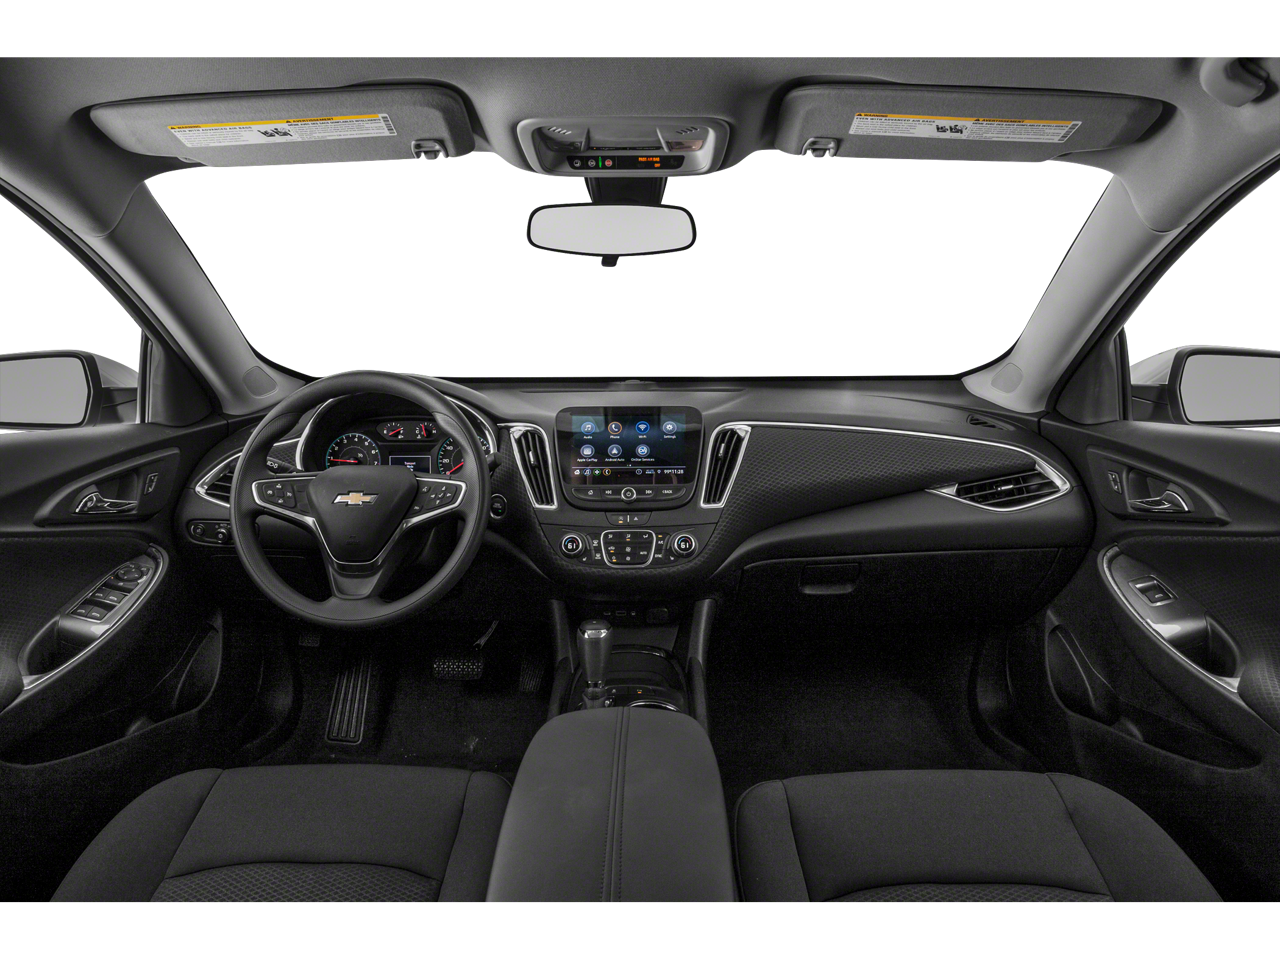 2022 Chevrolet Malibu LT GM CERTIFIED